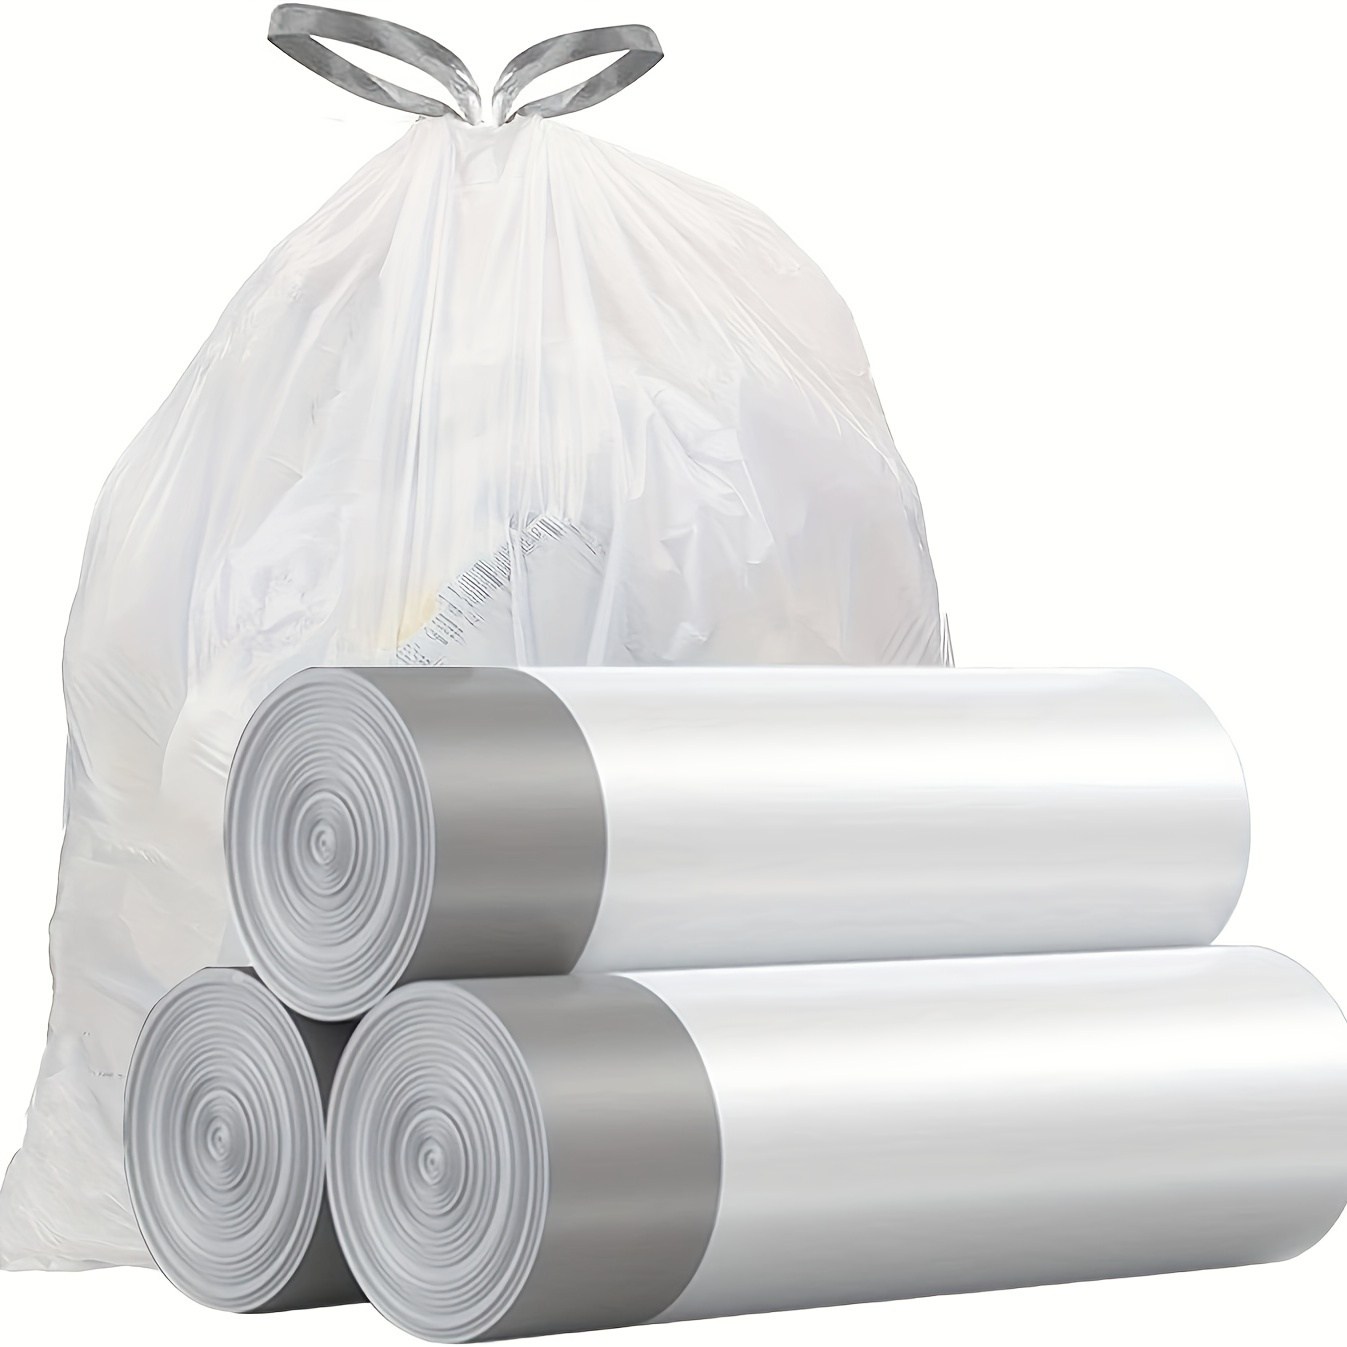 8 Gallon Trash Bags Drawstring, Strong Medium Kitchen Garbage Bag White  Trash Can Liners, 22 x 23, (34 Count)